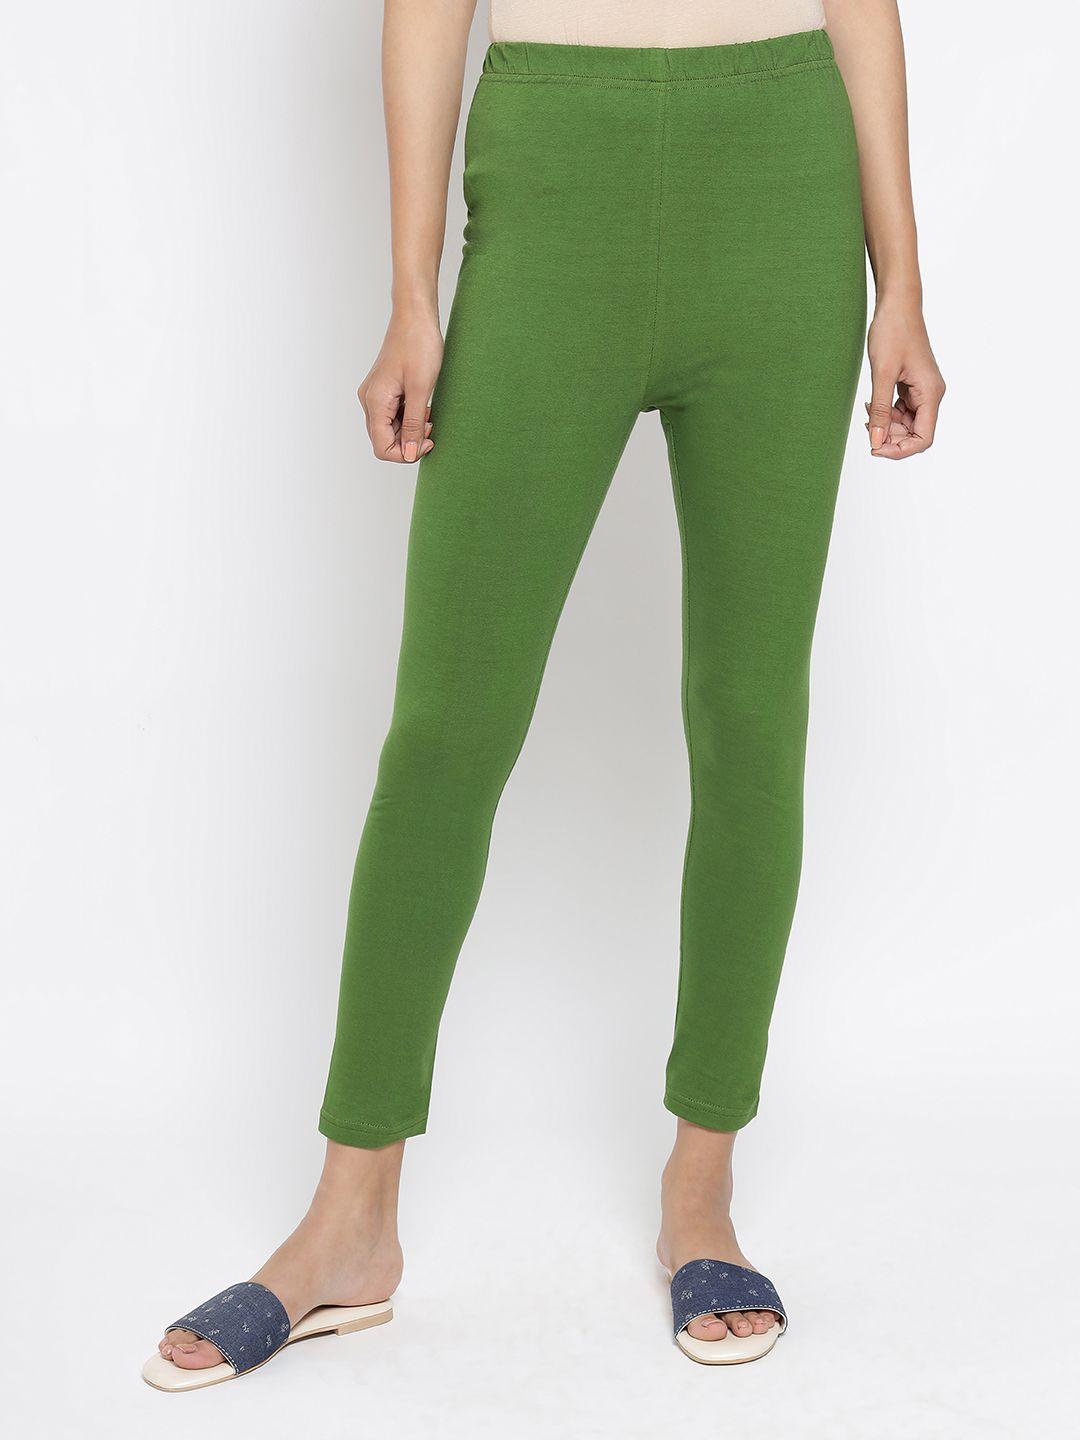 aurelia green solid tights